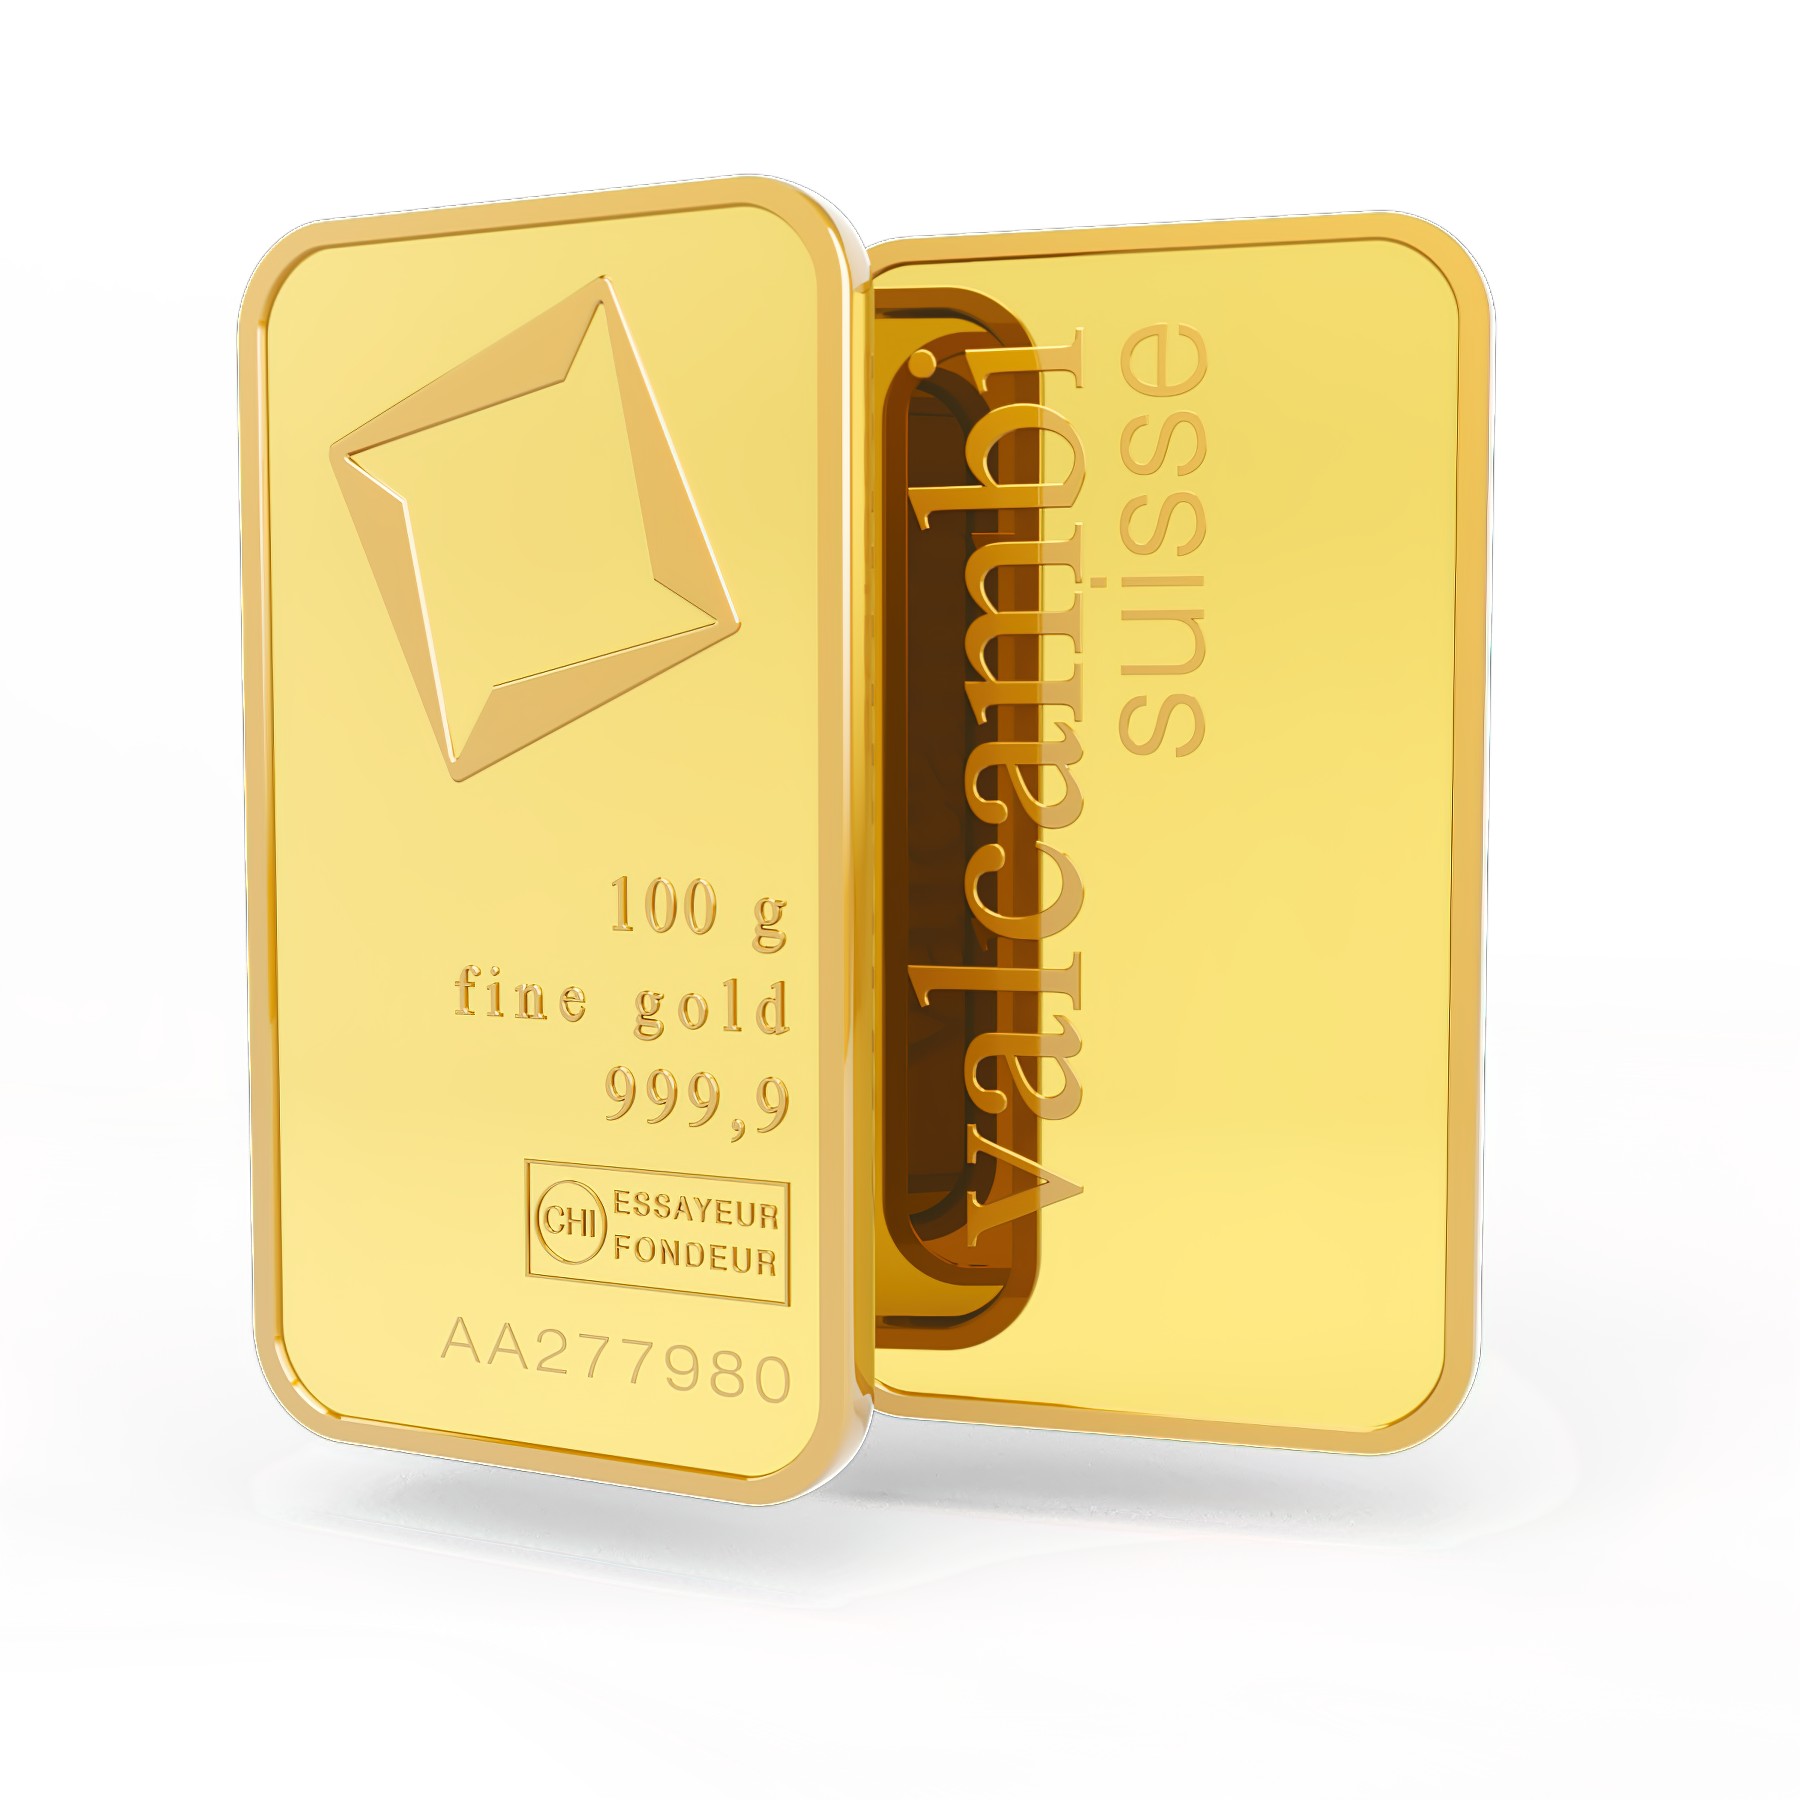 Aranyrúd 100gr, Svájc, Fine Gold 999,9